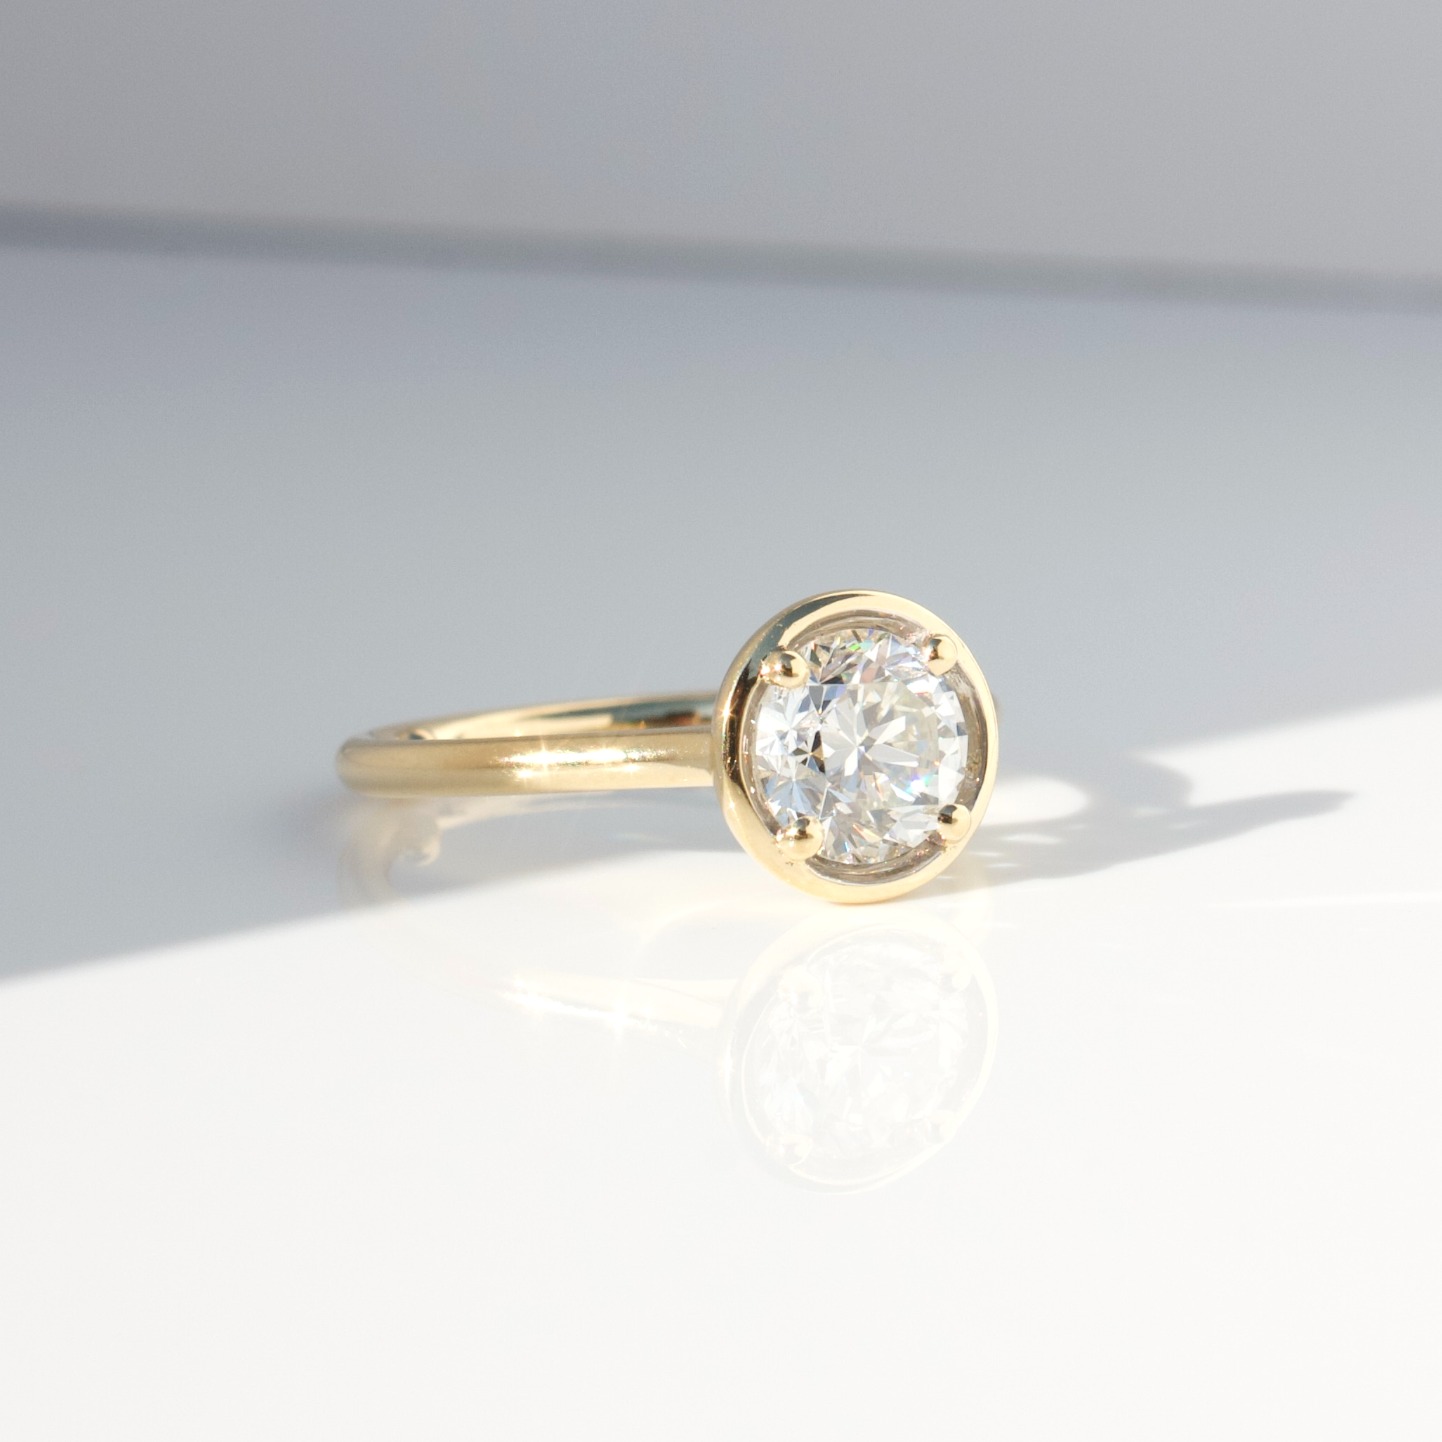 Round Brilliant Cut Tube Set Solitaire Diamond Ring, diamond ring, diamond engagement ring, engagement ring, round diamond, danielle camera jewellery